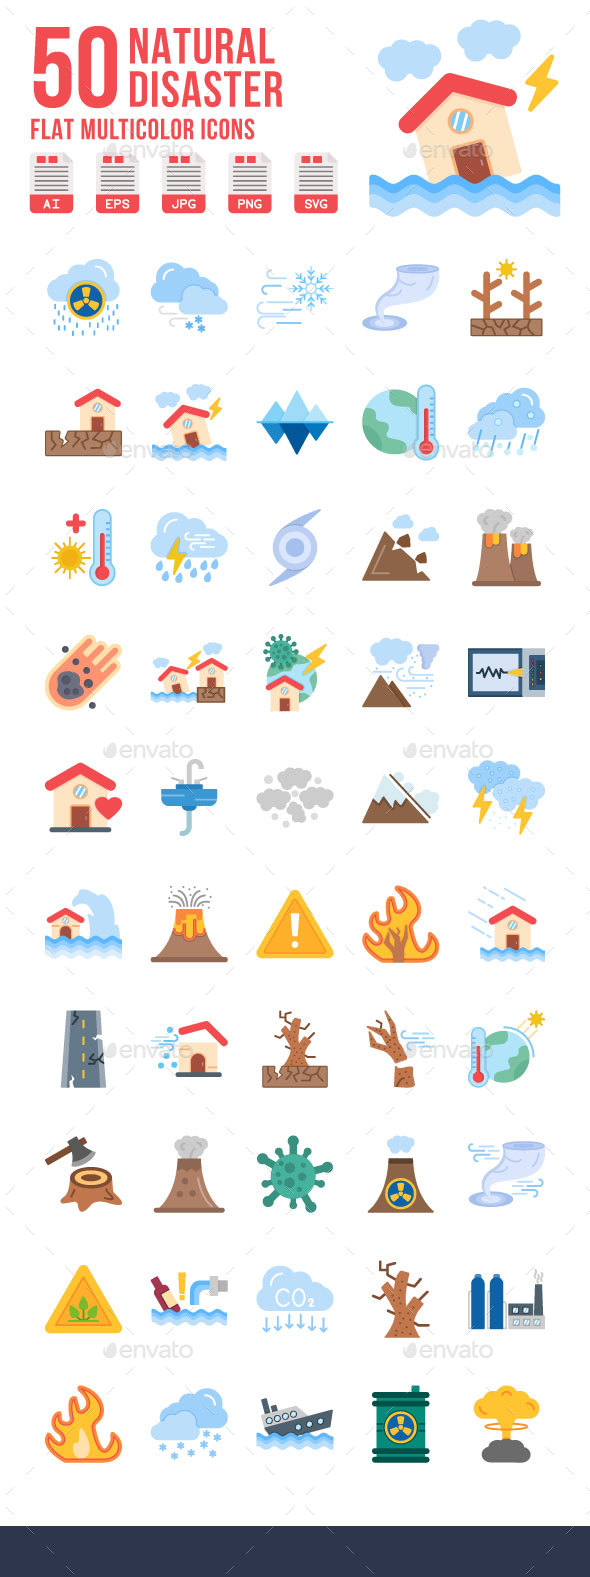 [DOWNLOAD]Natural Disaster Flat Icons